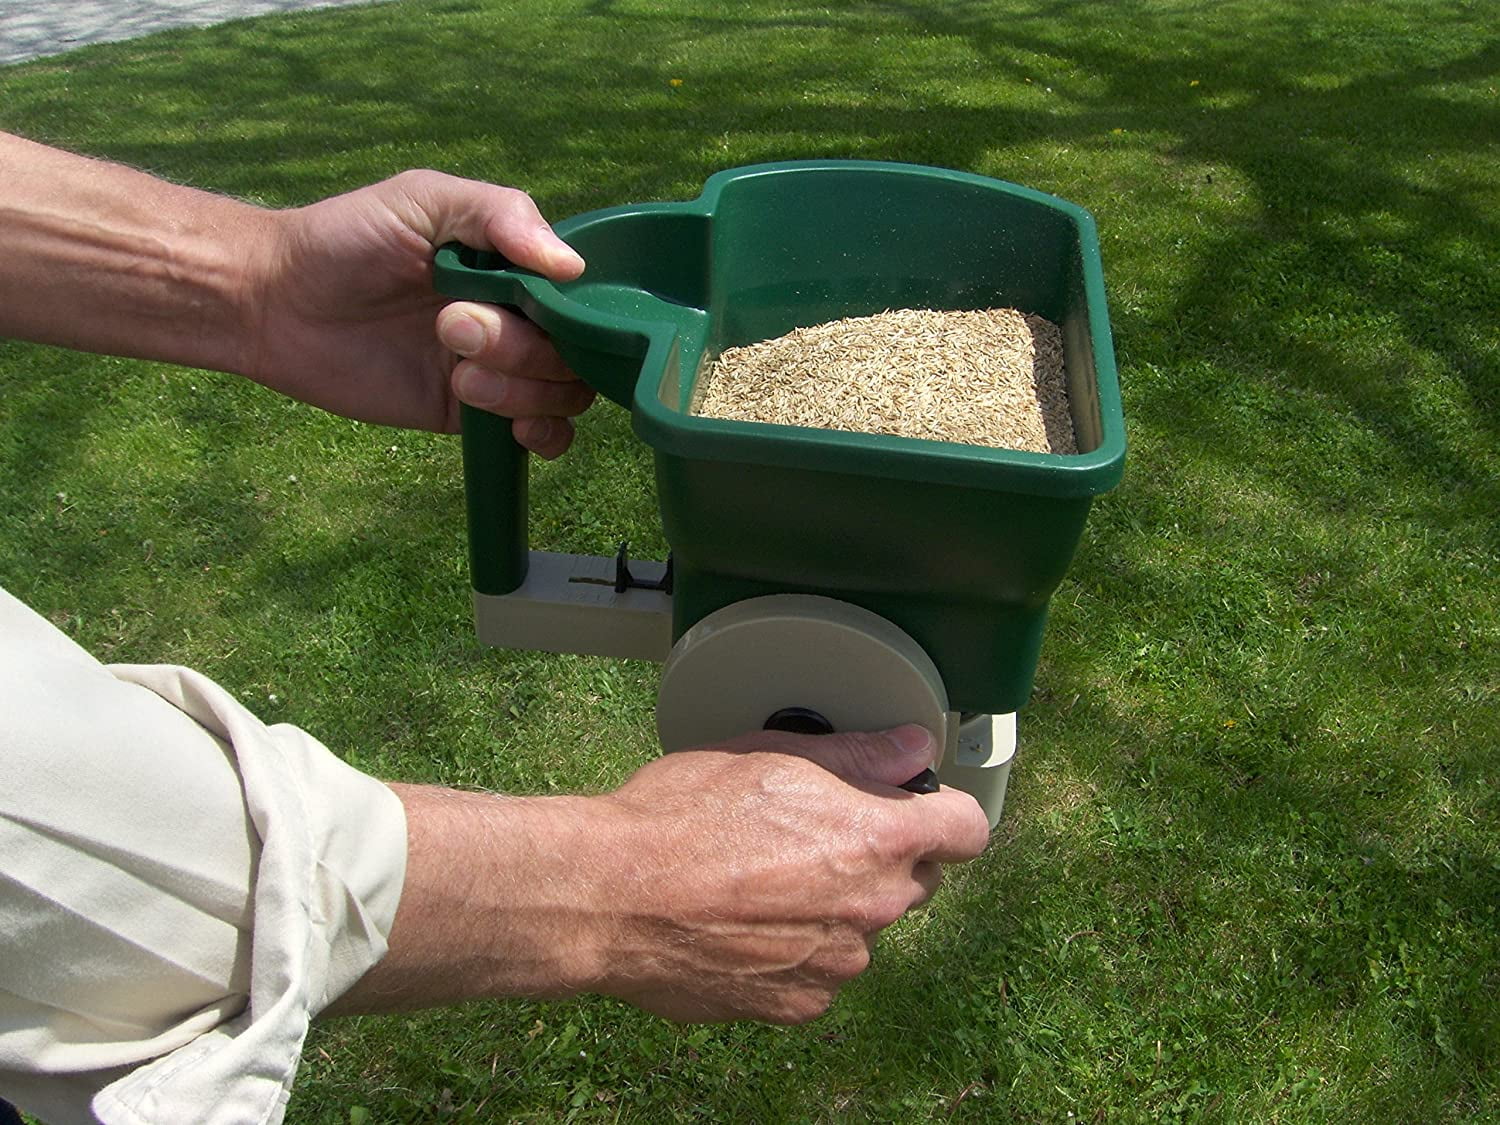  Manual Seed Planter Fertilizer Machine, Corn Soybean Peanut  precisionHand-Push Roller Seeder,Lawn & Garden Spreaders with 5 Seed Plates  : Patio, Lawn & Garden